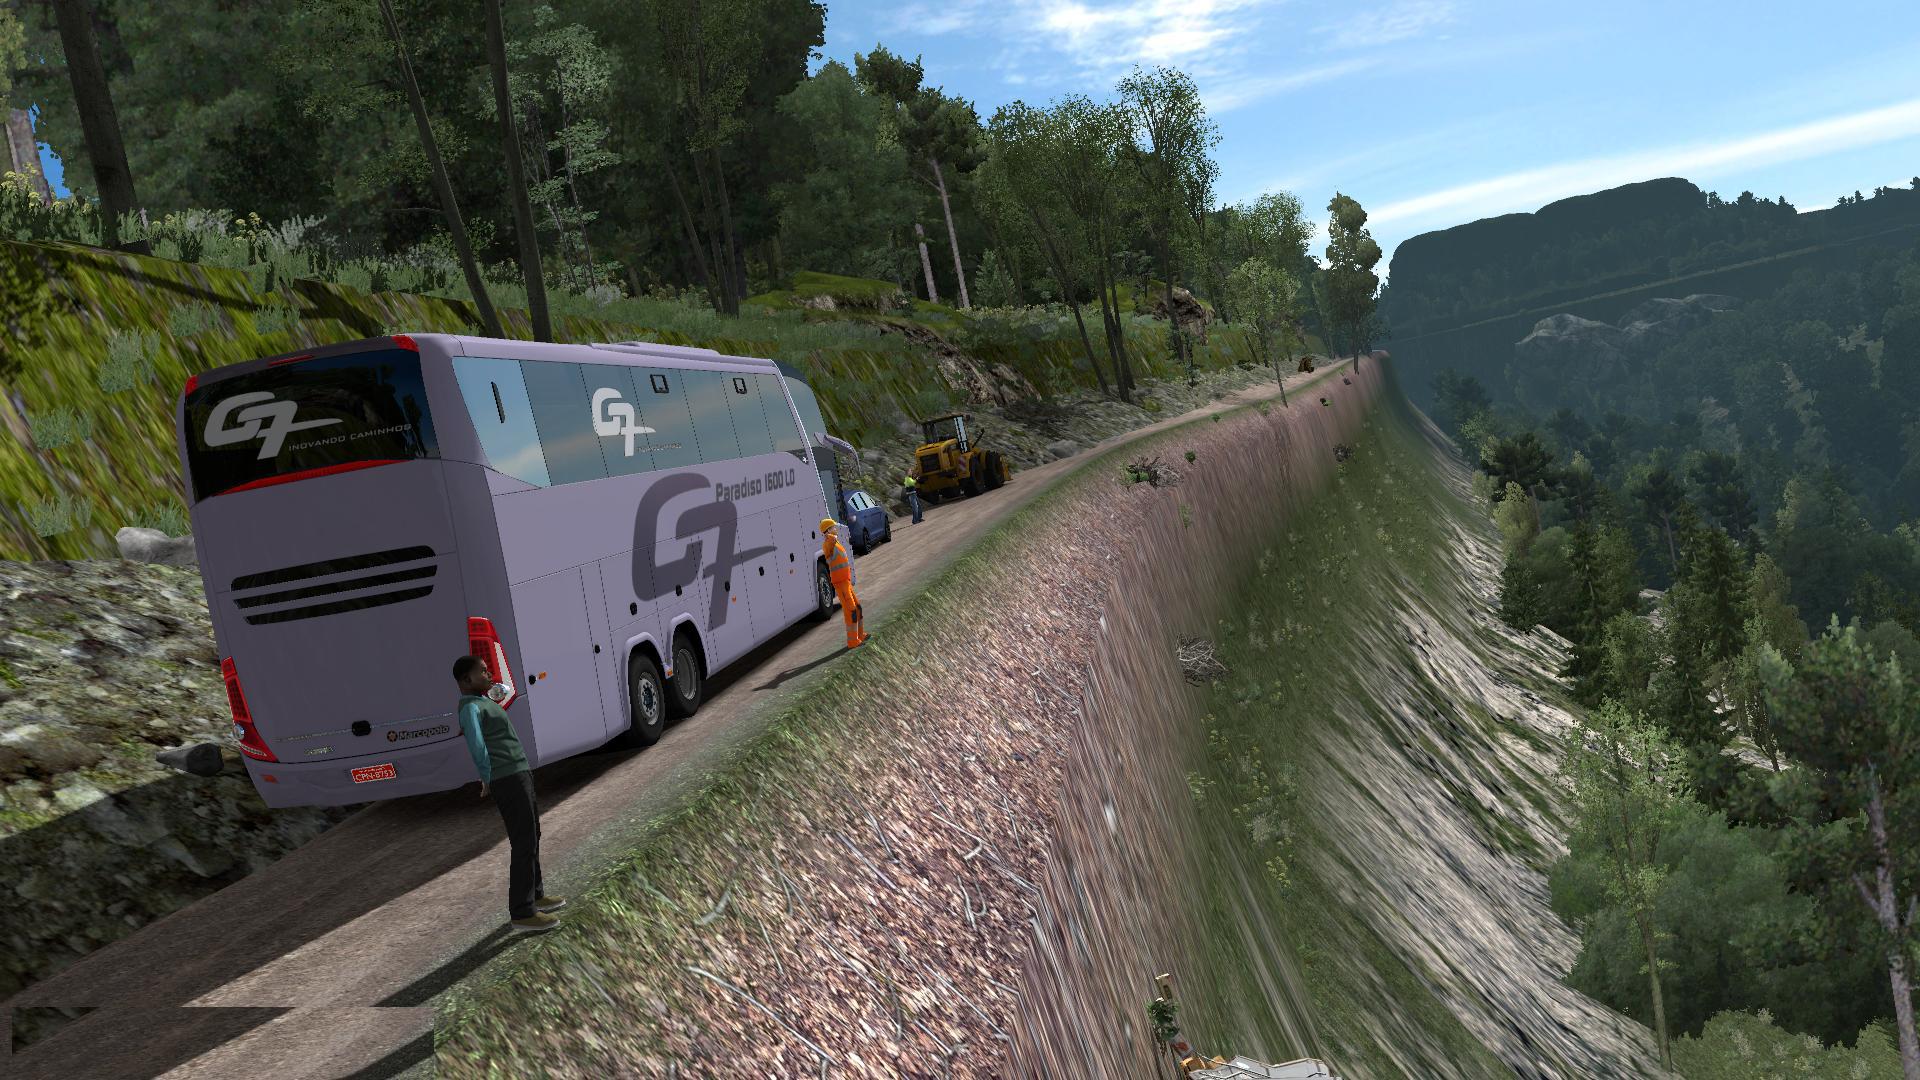 euro truck simulator 2 mod bus indonesia